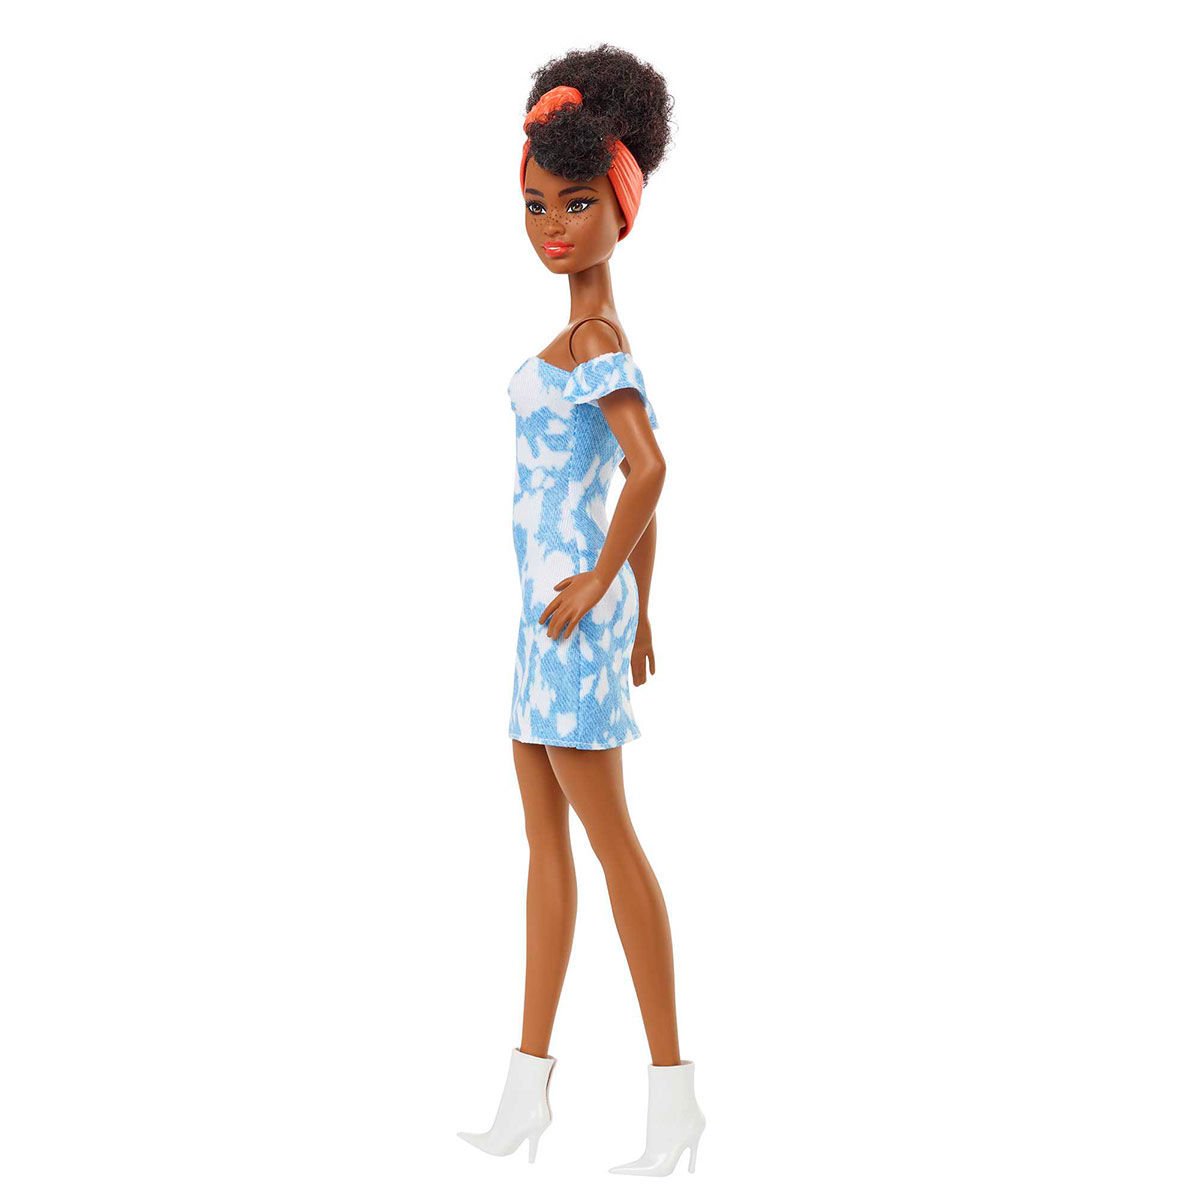 HBV17 Barbie Fashionistas Siyah Saçlı, Kot Elbiseli